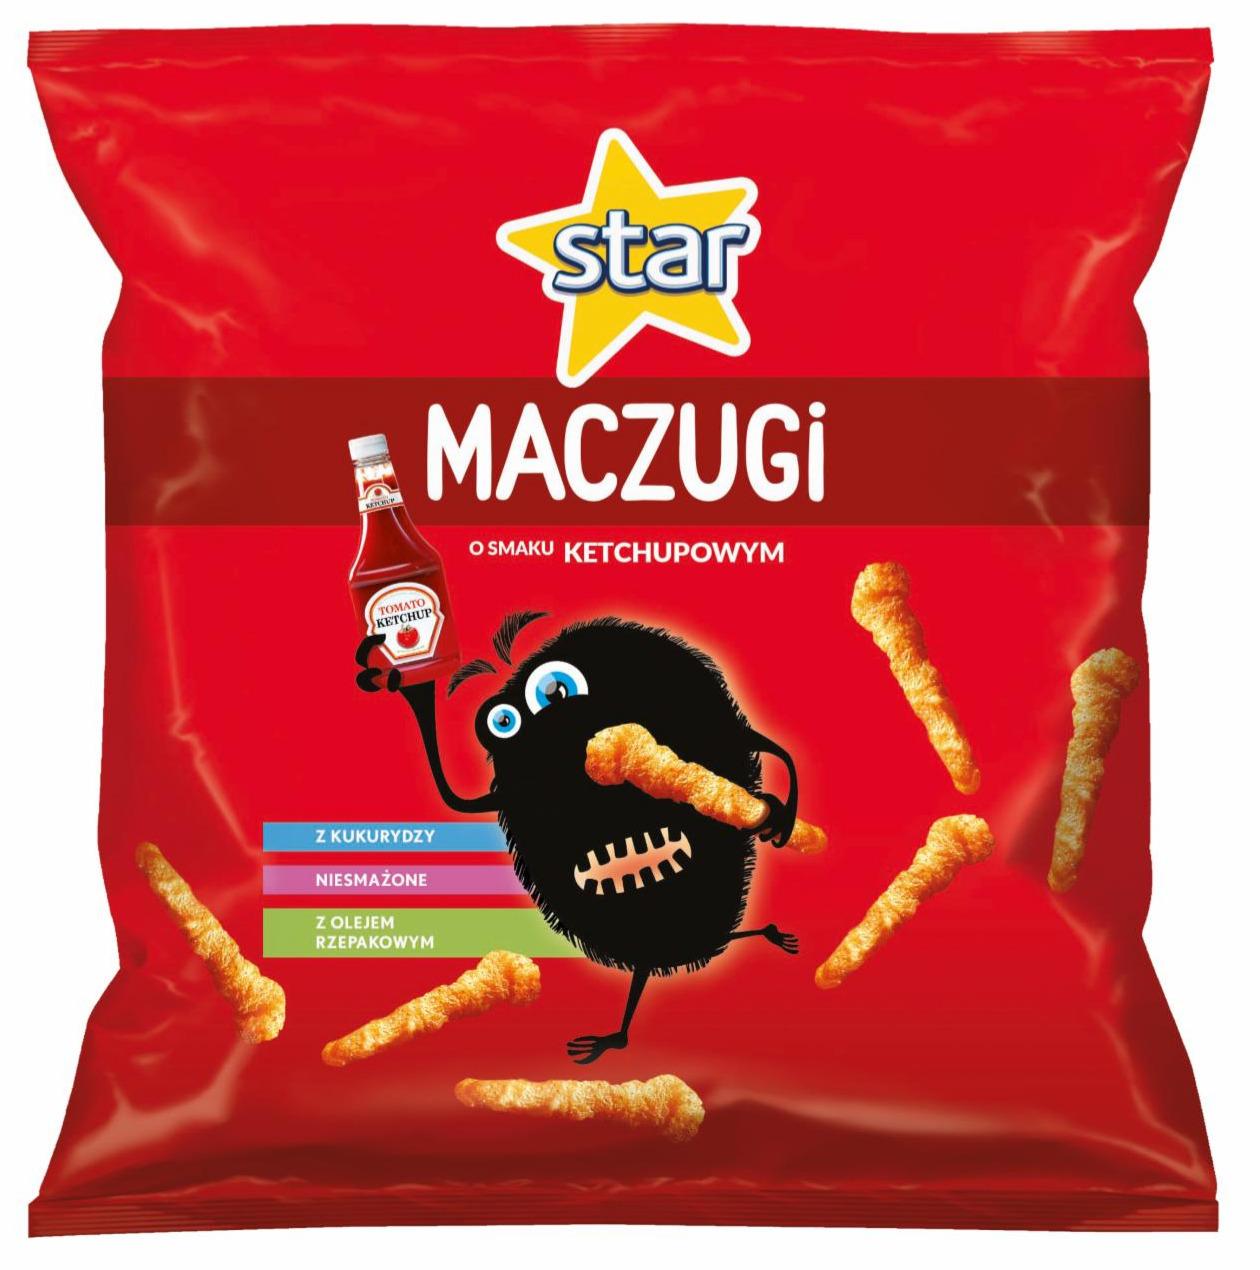 Zdjęcia - Maczugi Chrupki kukurydziane o smaku ketchup Star